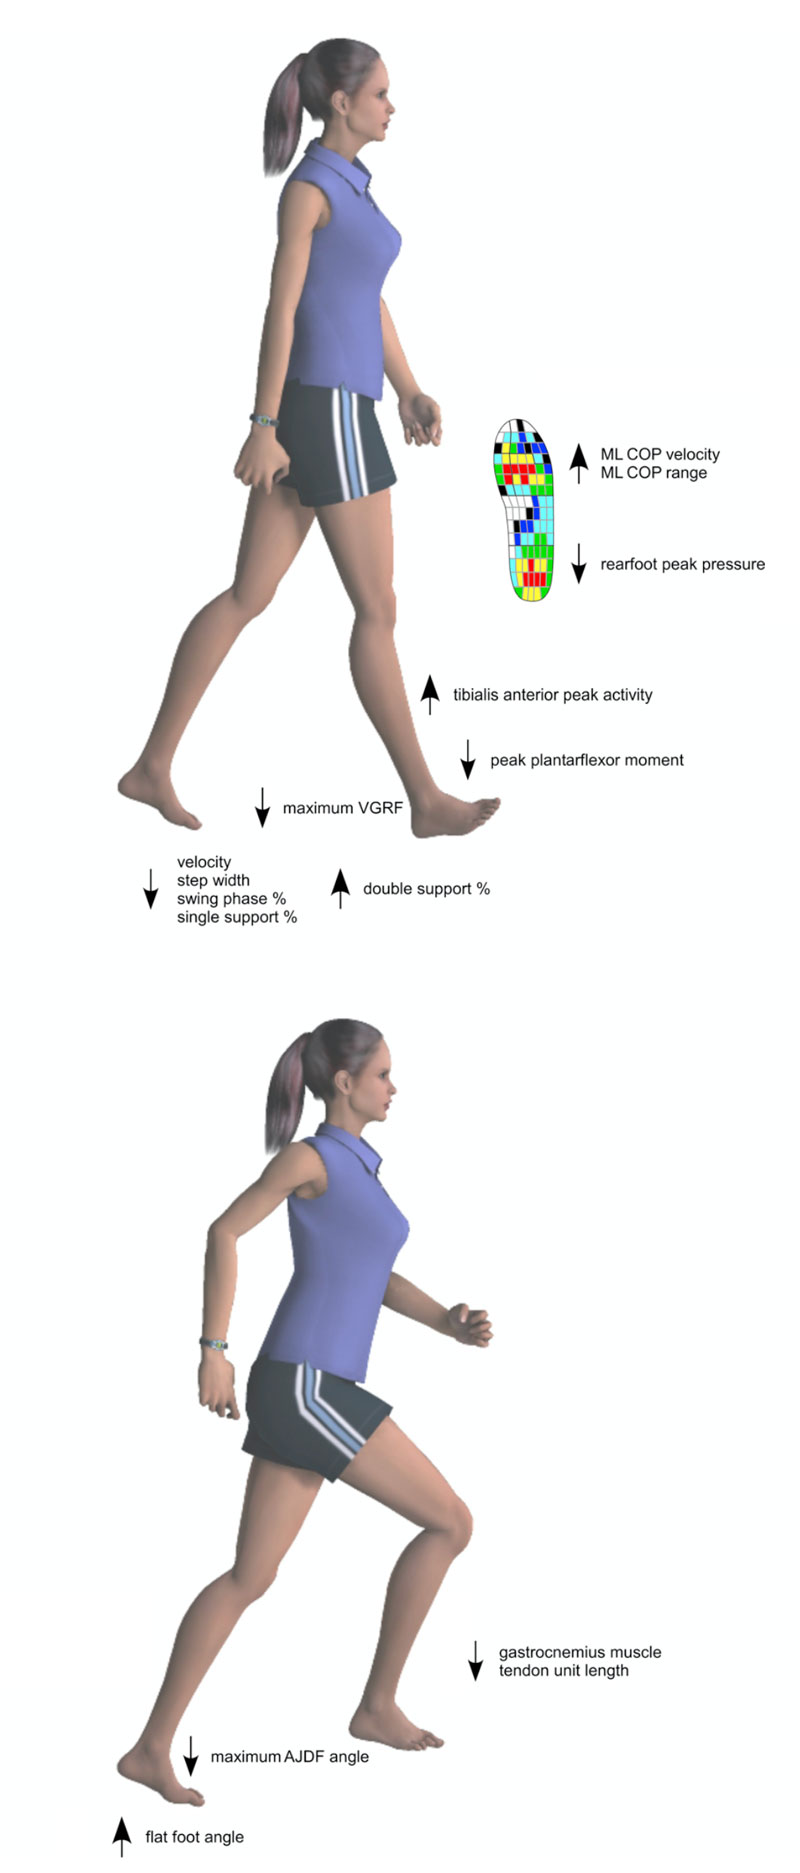 Study Shows Heel Lifts Affect Biomechanics, Muscle Function